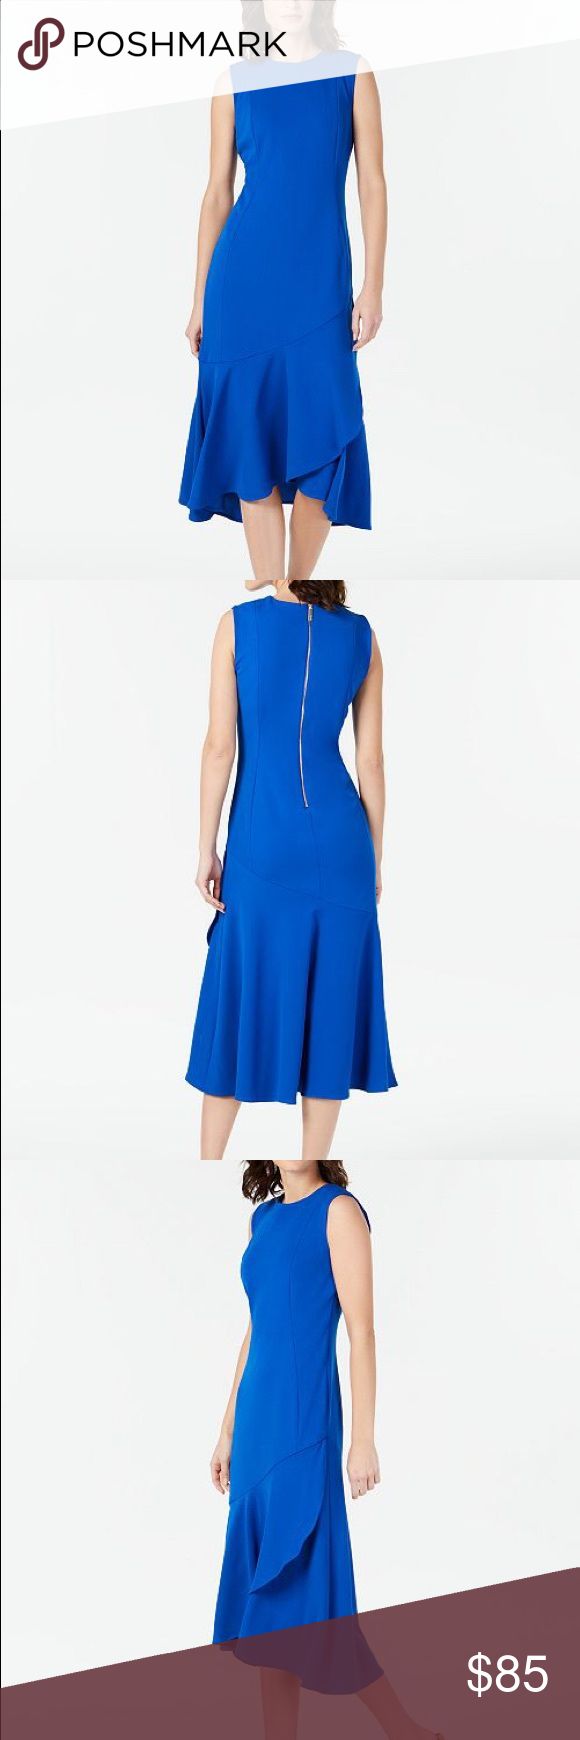 Calvin Klein royal blue dress 6 | Royal blue dress, Dresses, Royal blue